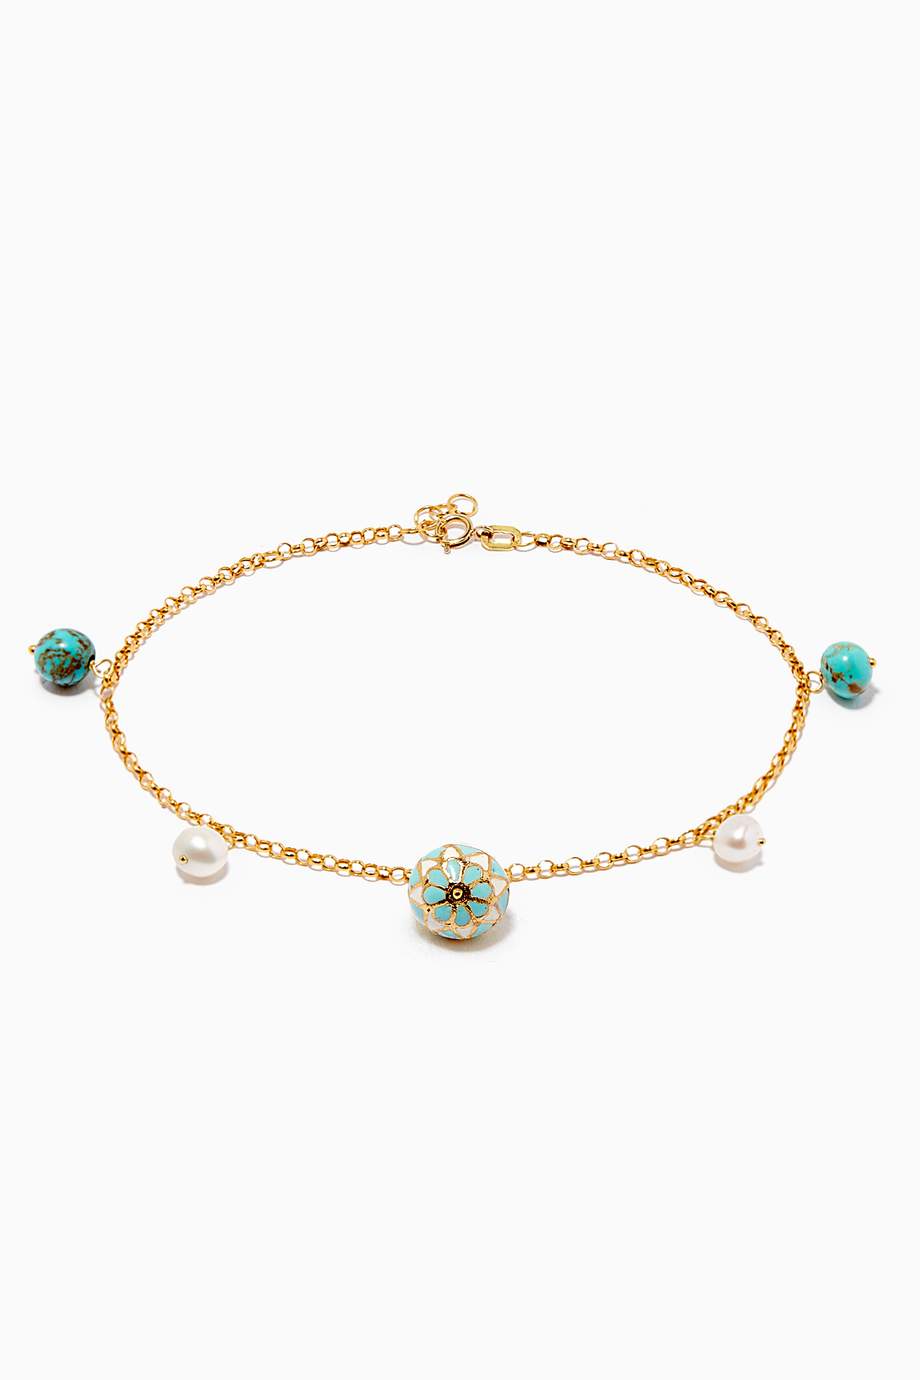 Shop M's Gems Gold Feroza Charm Bracelet in 18kt Gold for Women ...